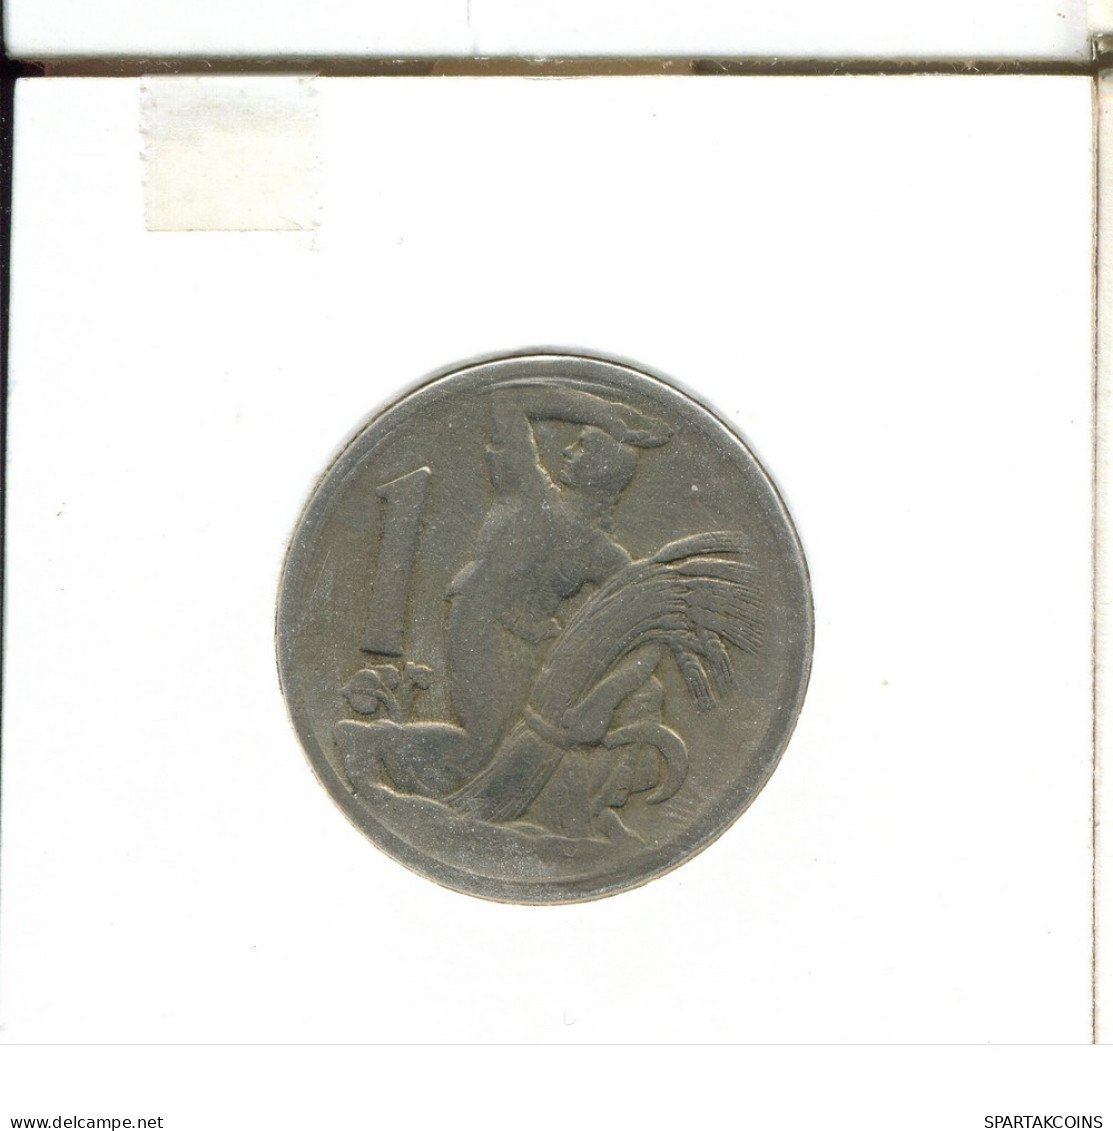 1 KORUNA 1924 CZECHOSLOVAKIA Coin #AS515.U.A - Cecoslovacchia